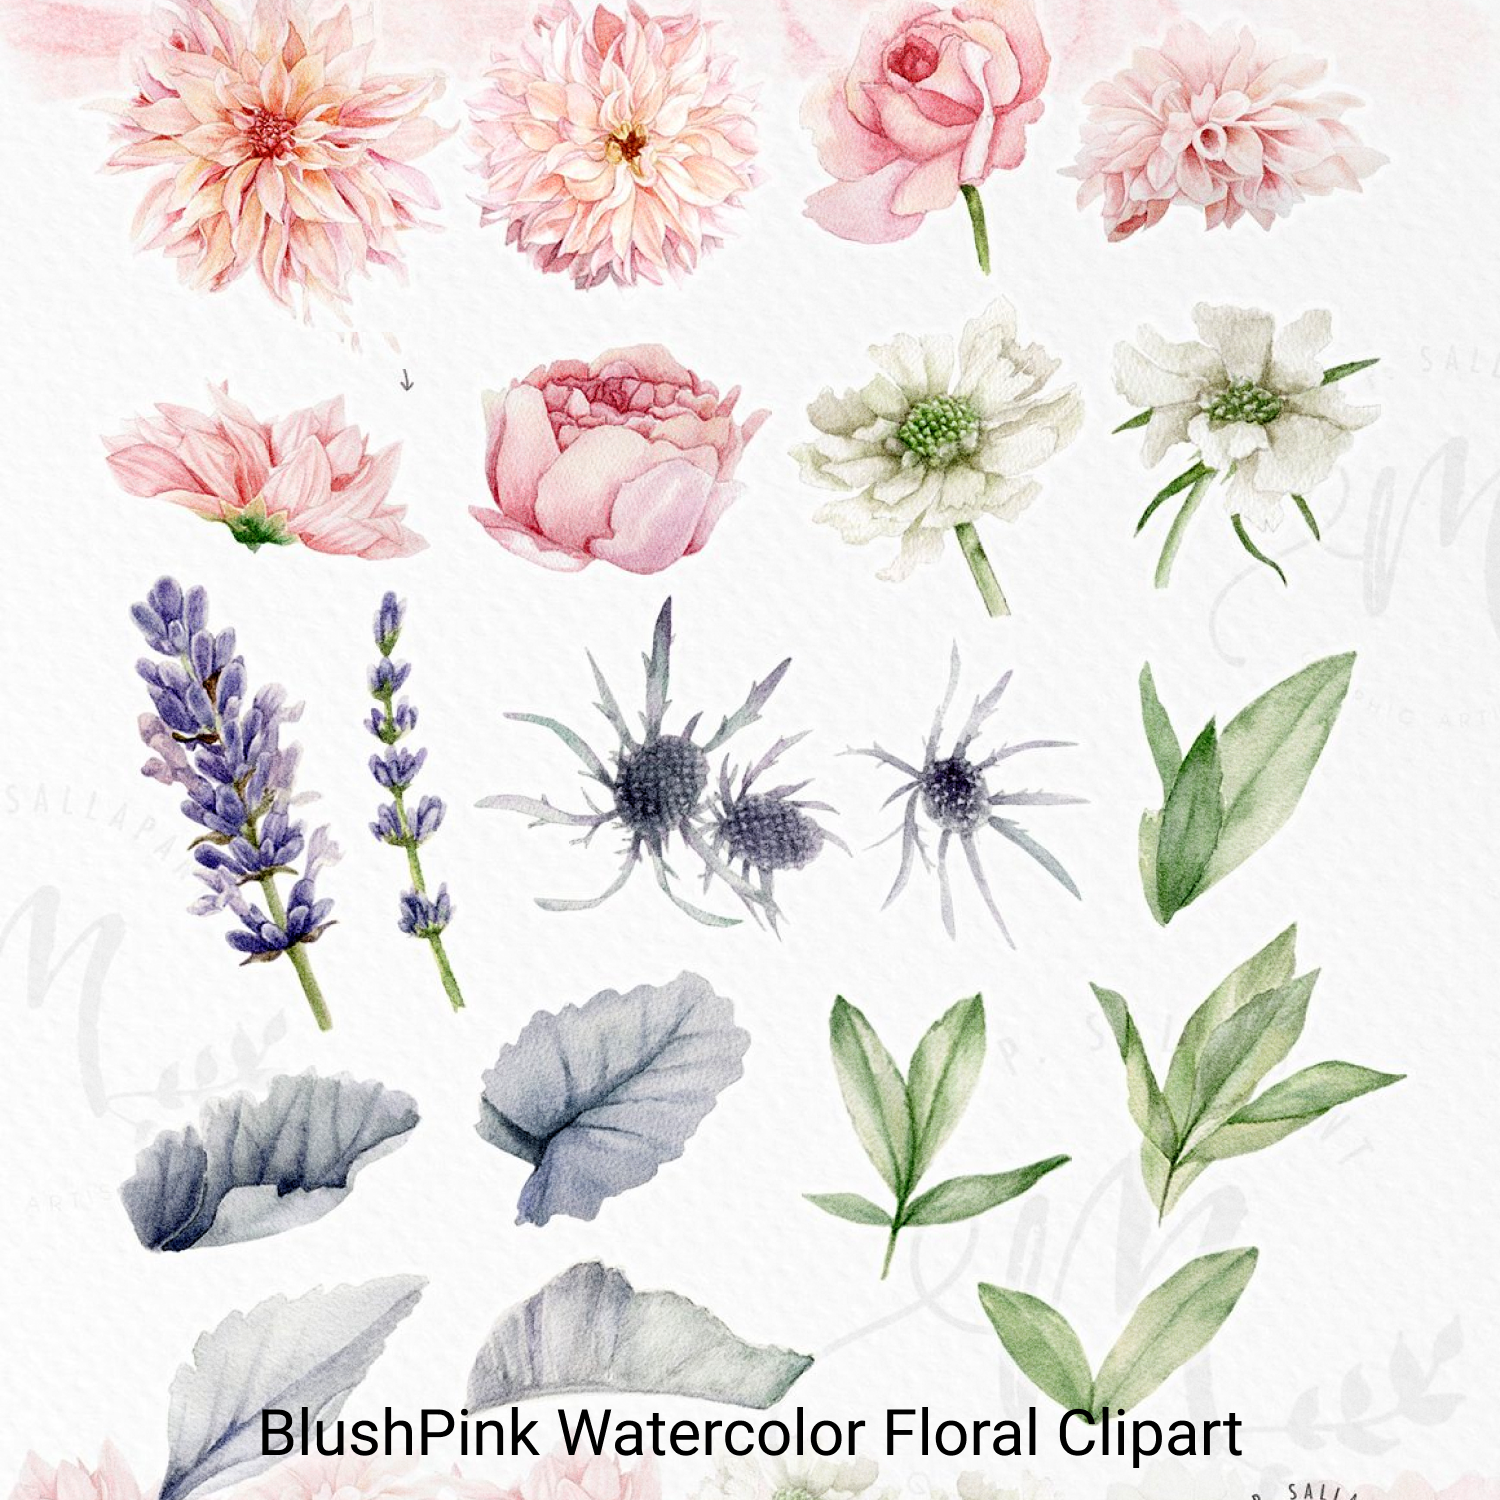 BlushPink Watercolor Floral Clipart - Preview Image.